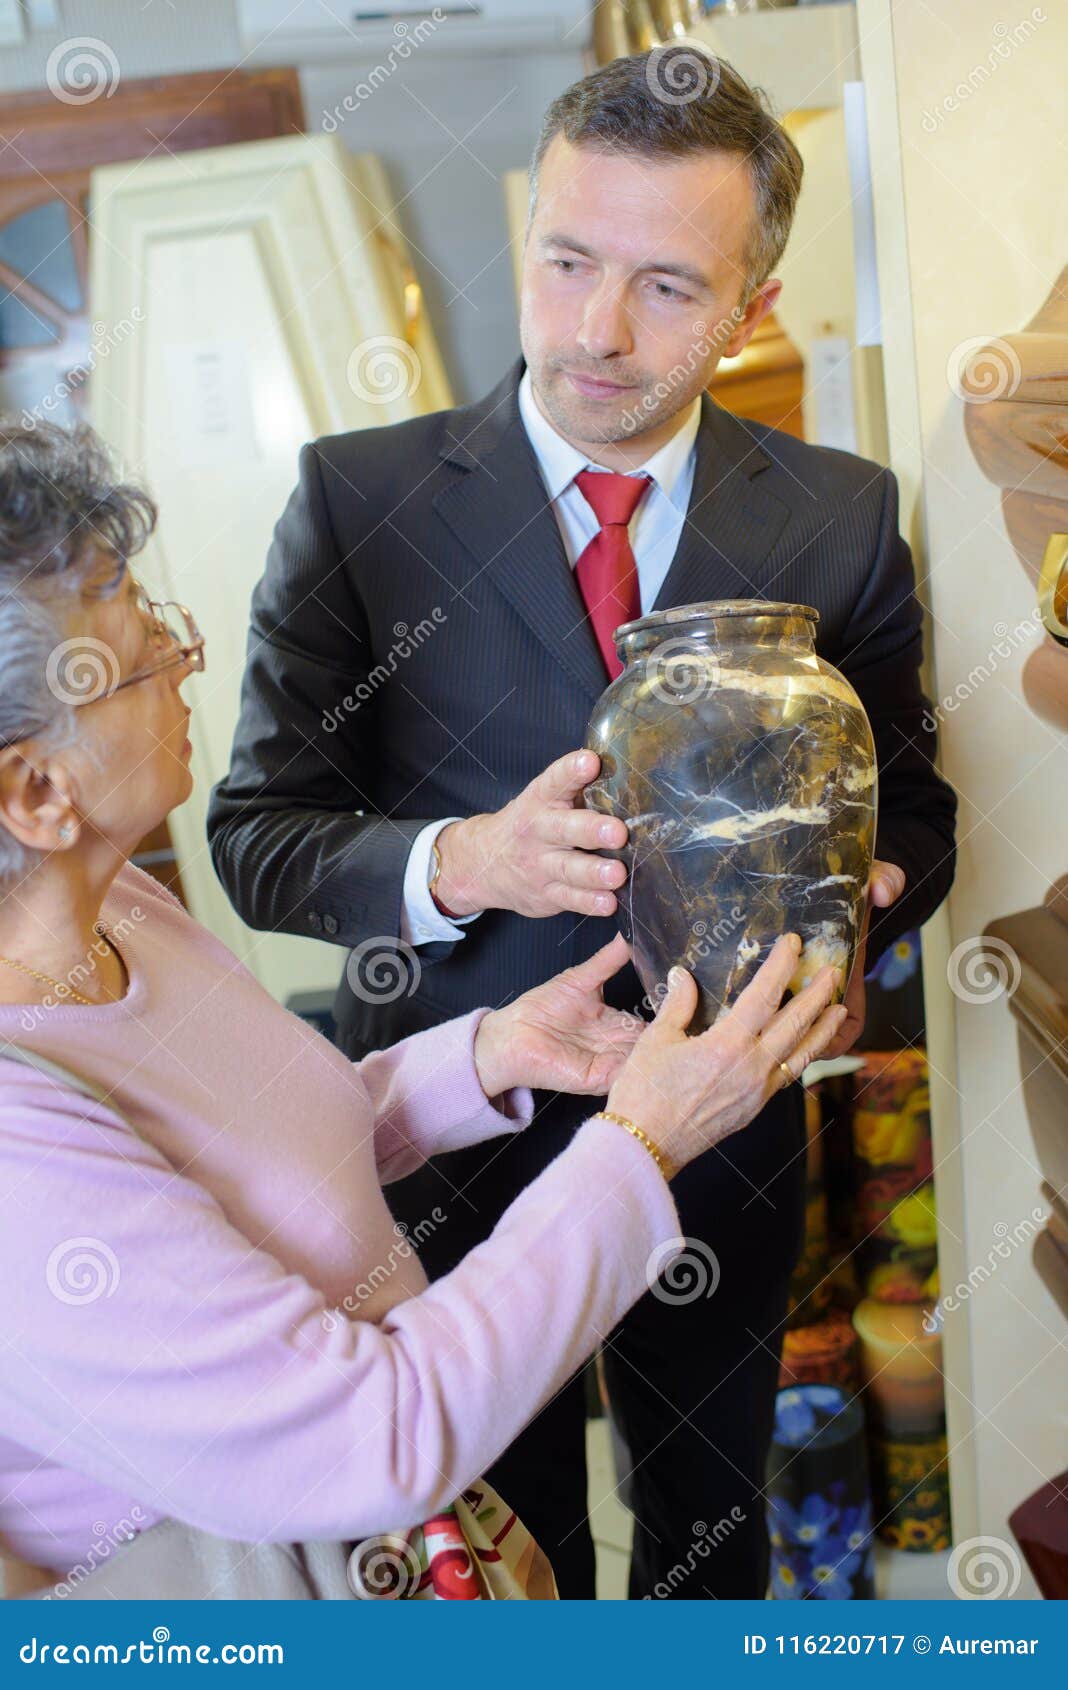 funeral director with widow choosing urn